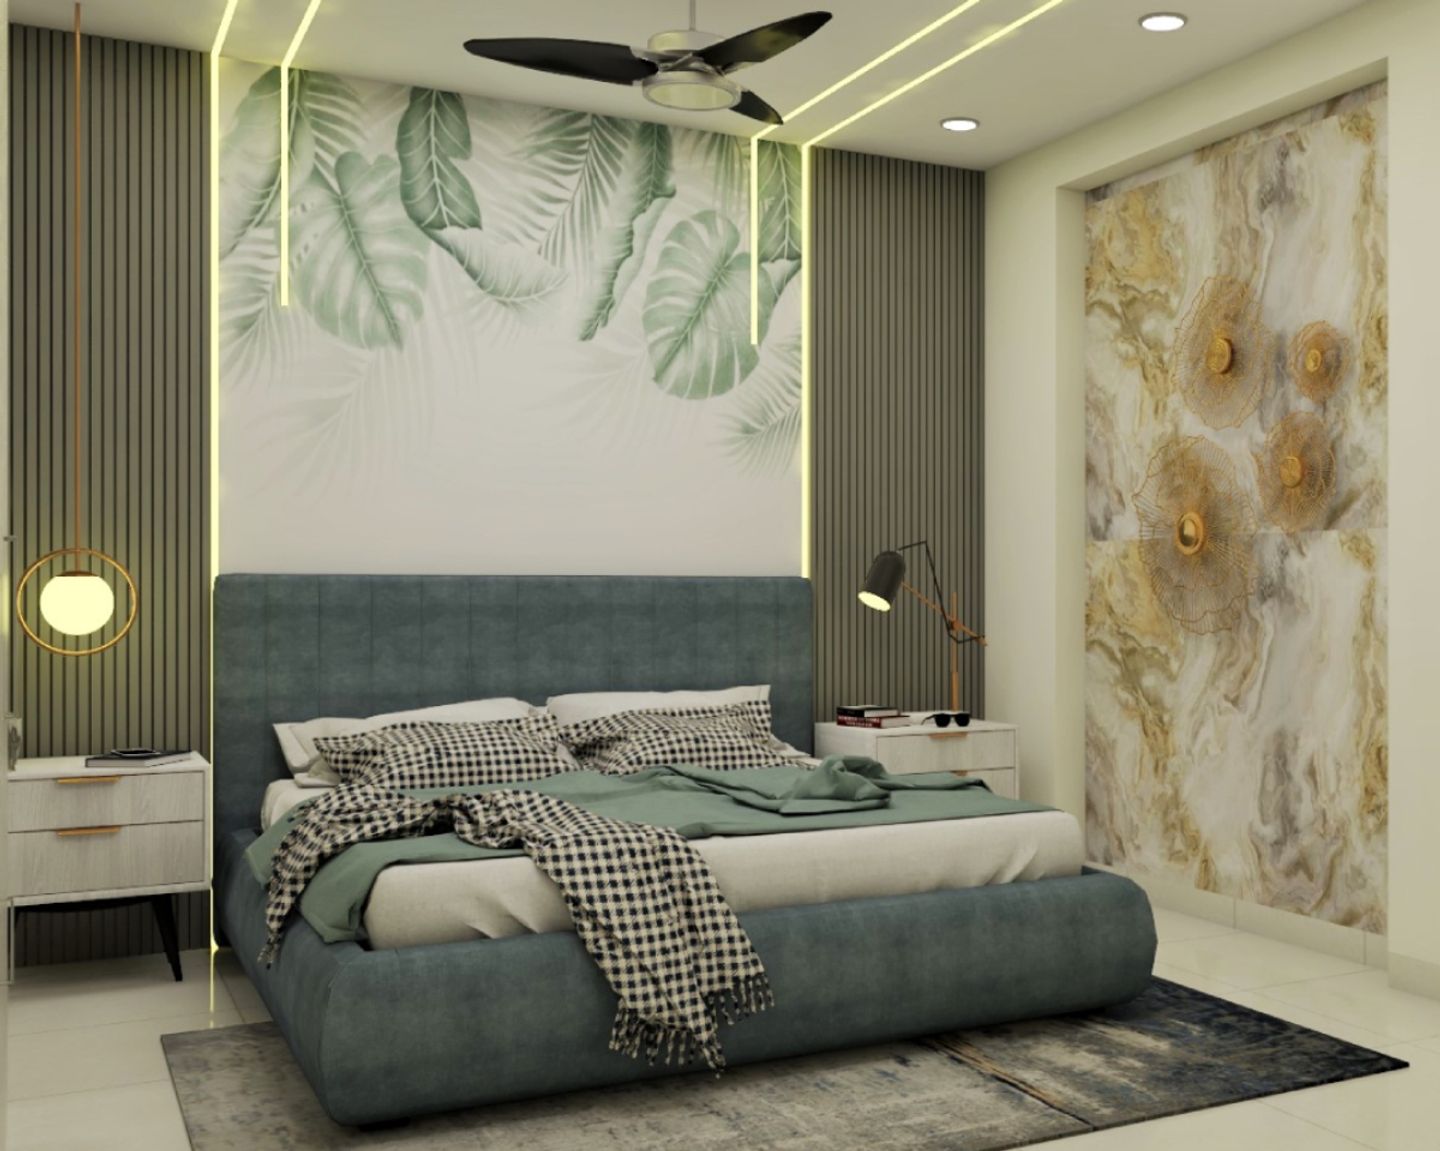 Master Bedroom With Floral Wallpaper - Livspace